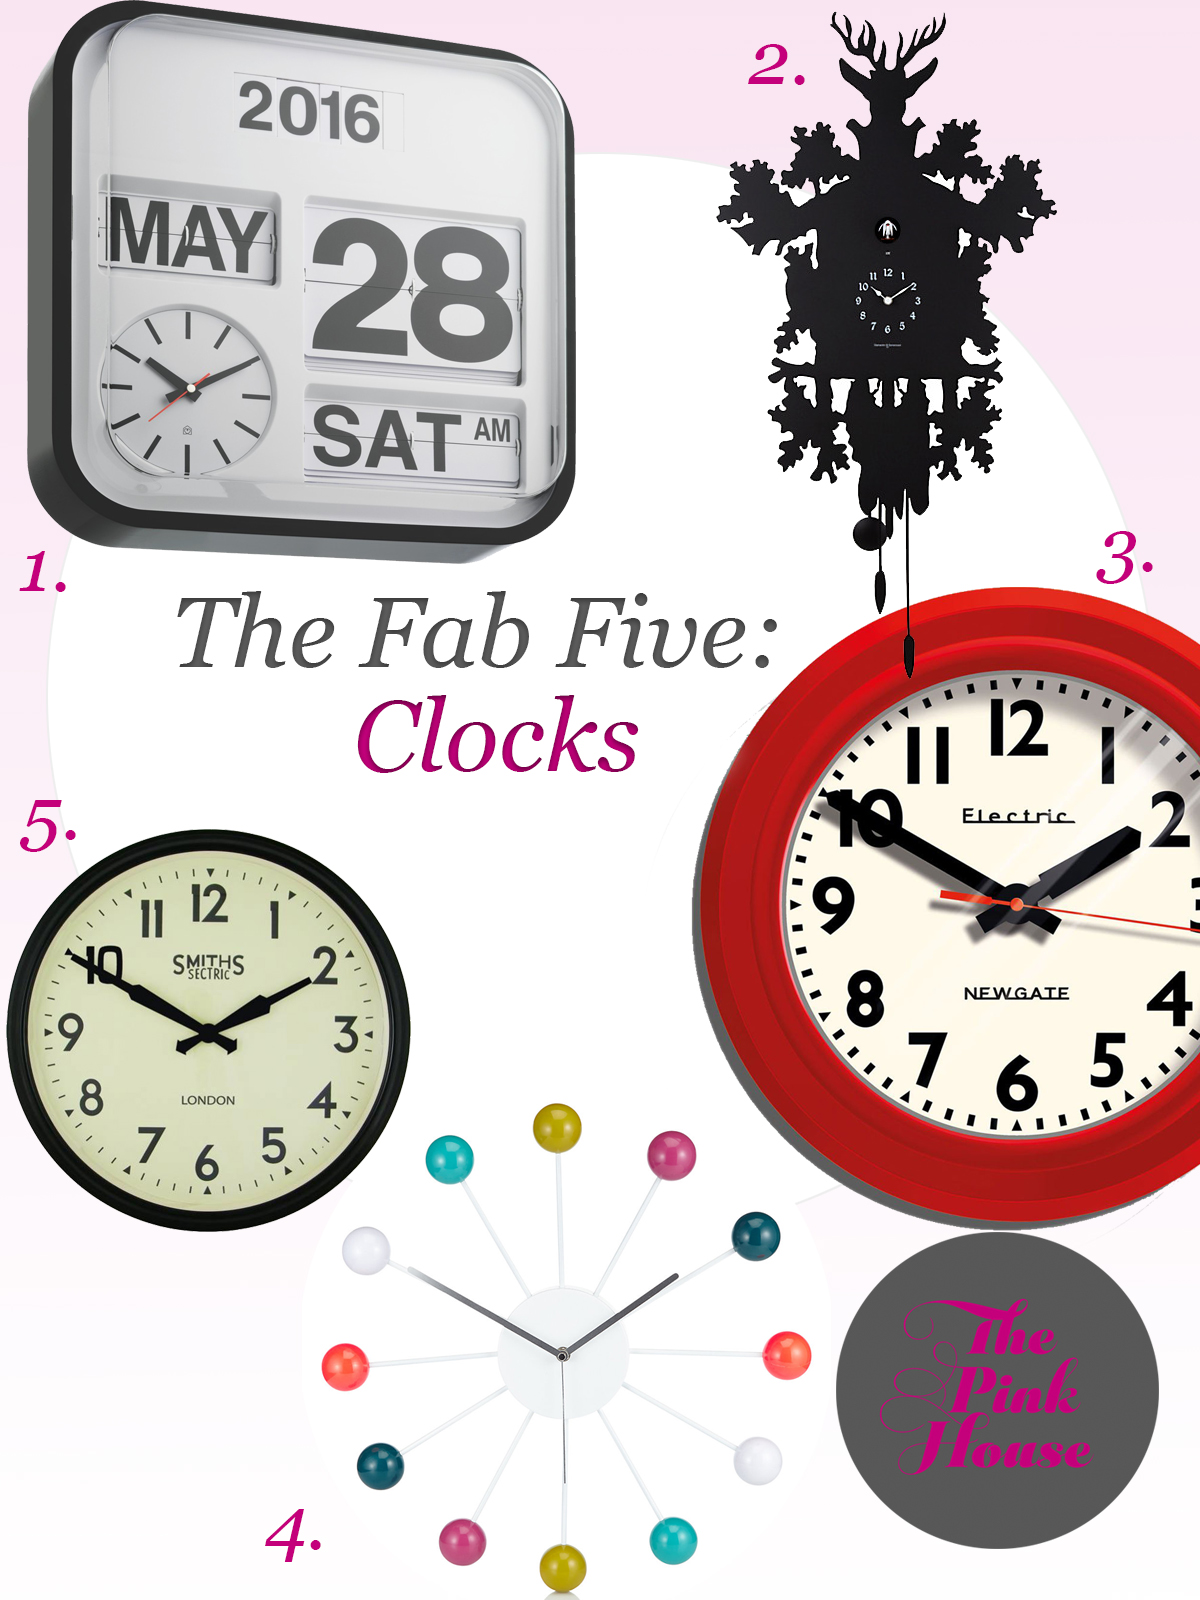 Cool clocks for sale